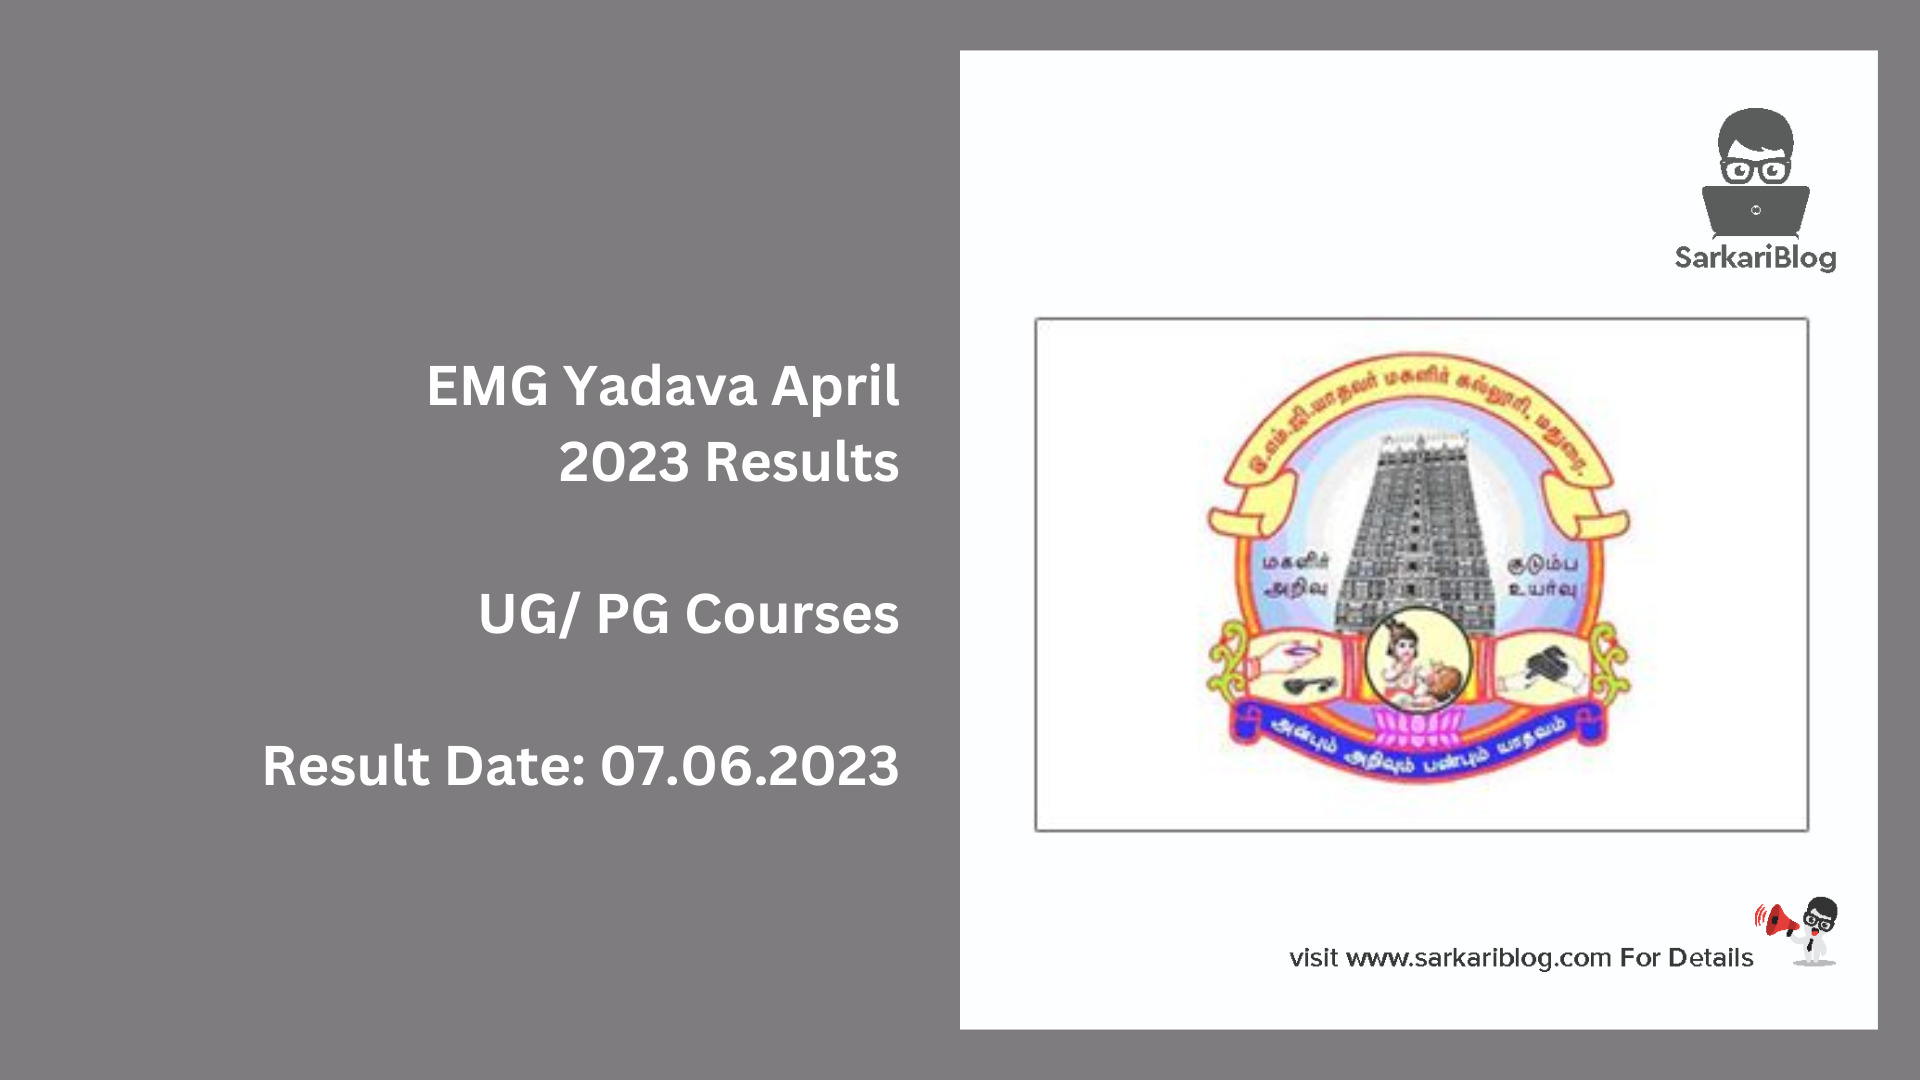 EMG Yadava April 2023 Results